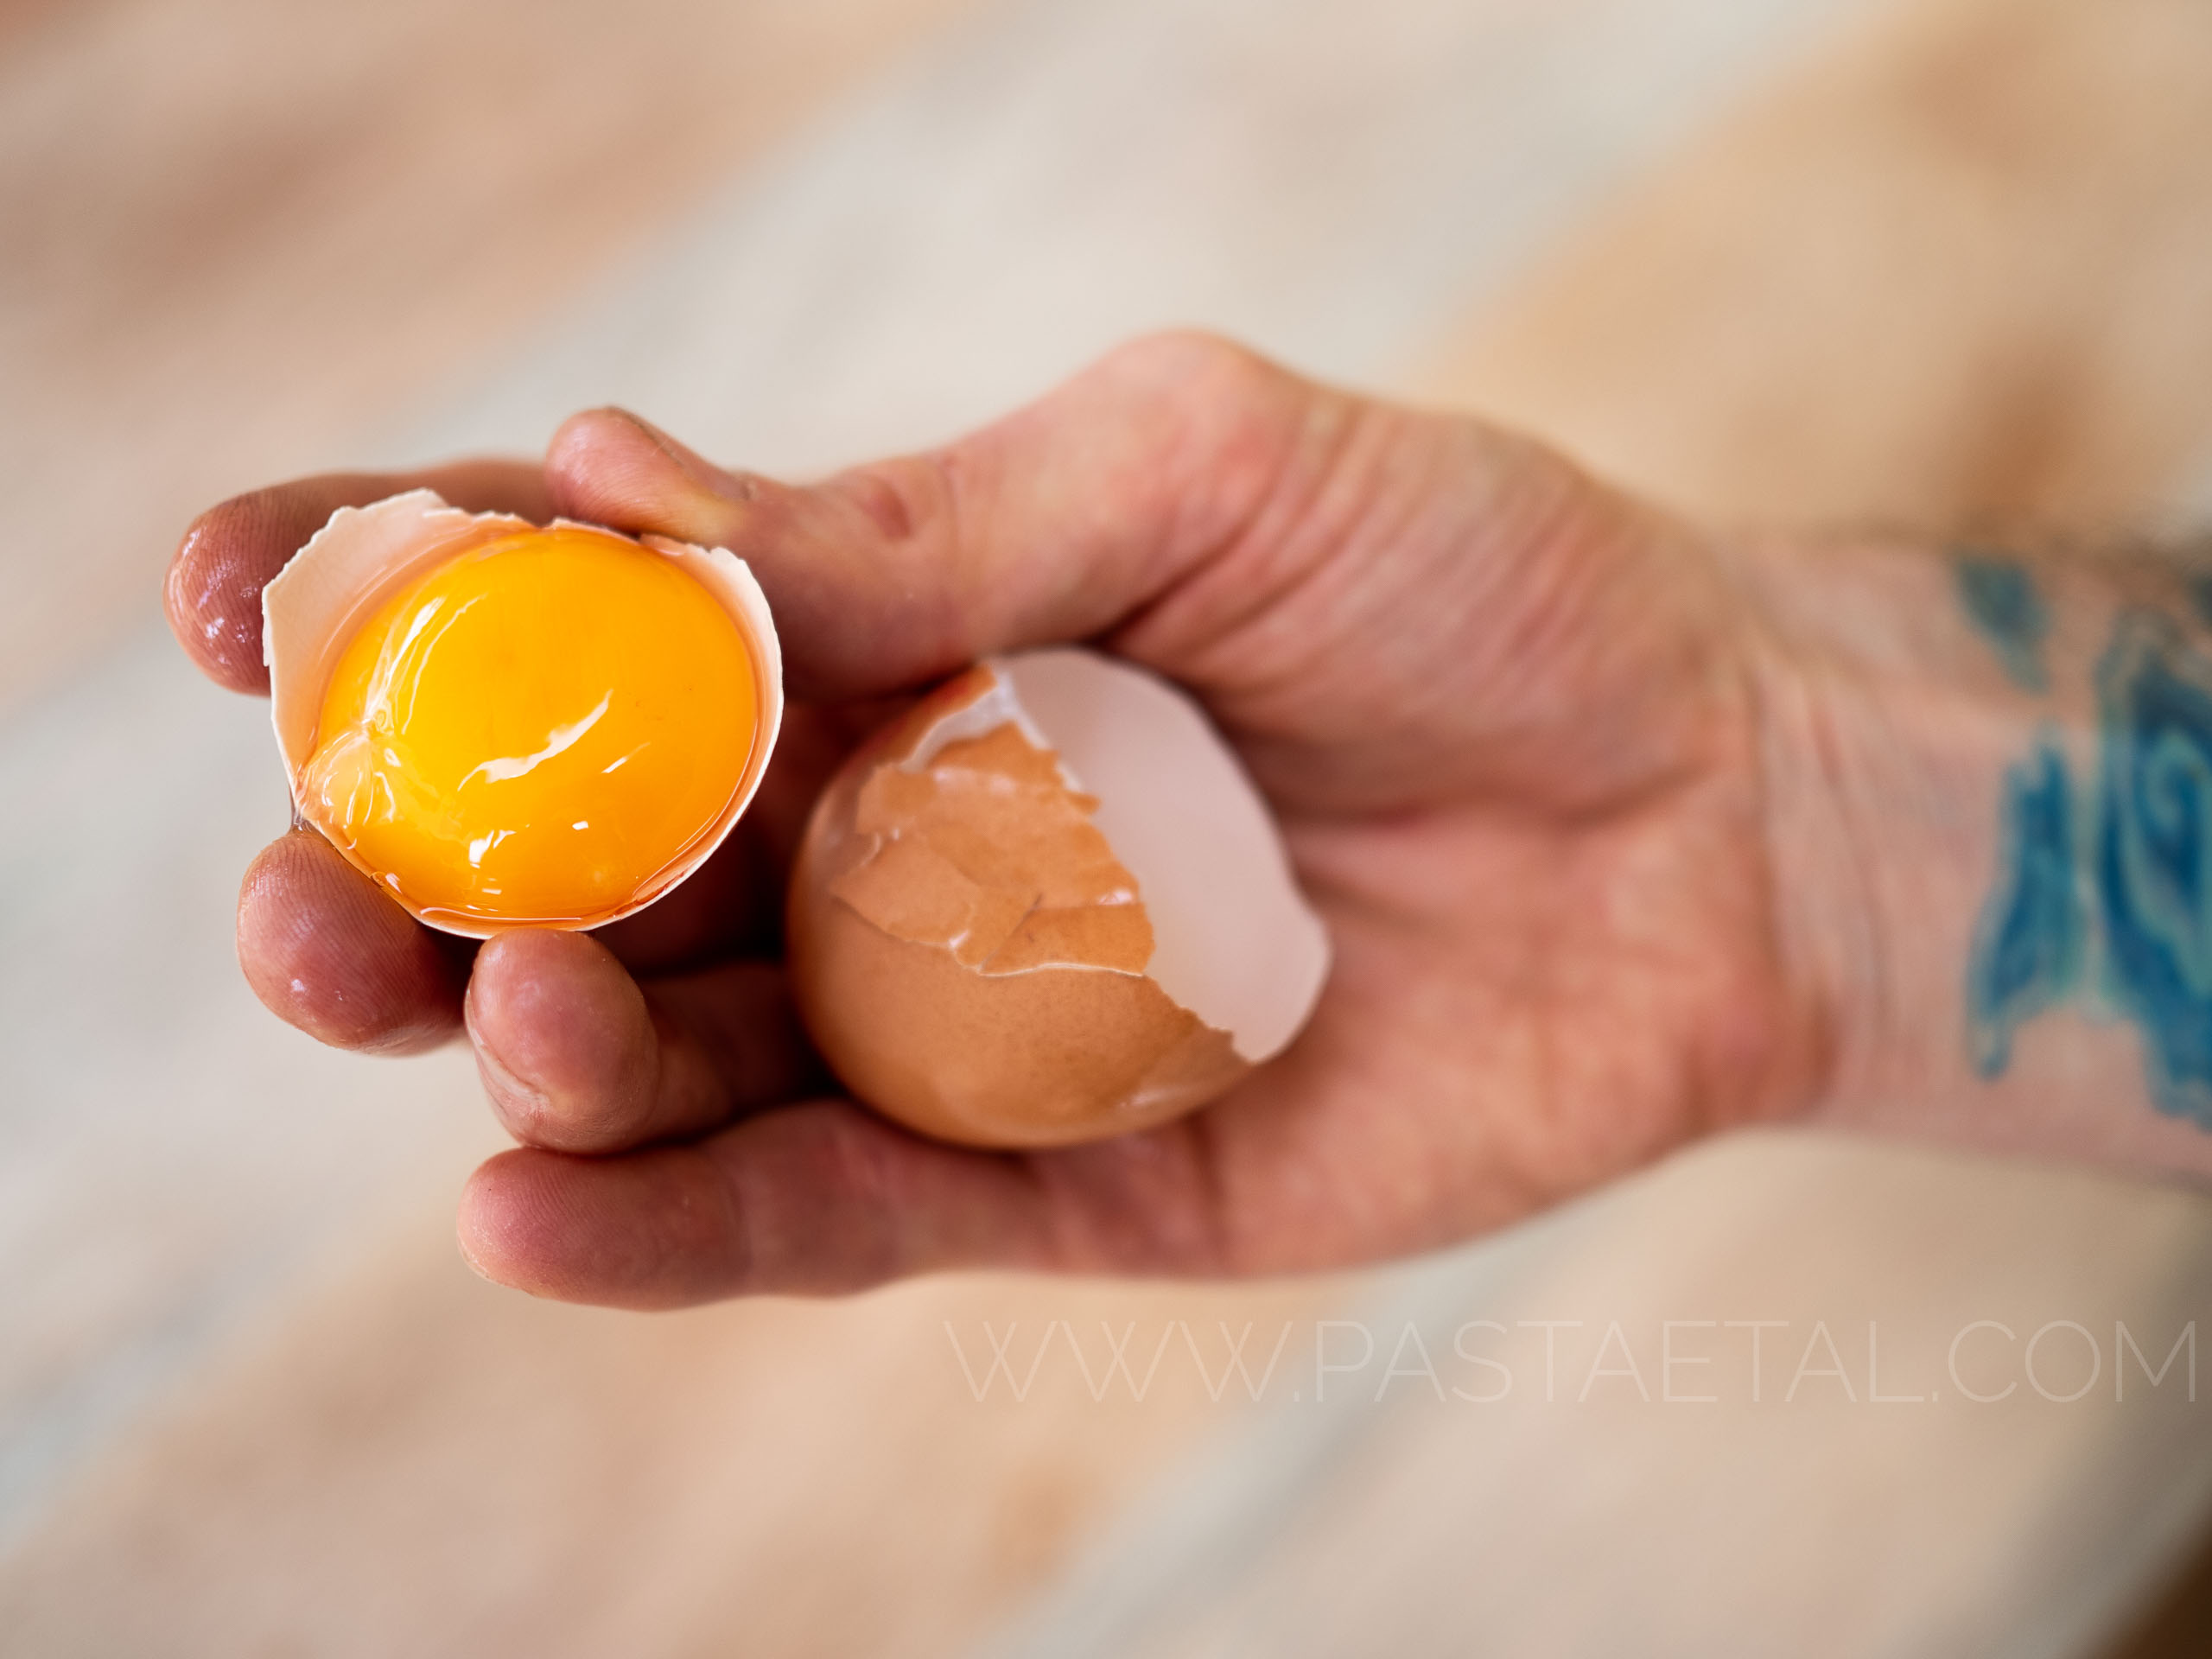 https://pastaetal.com/wp-content/uploads/2020/05/blog-egg-yolk-separated-in-shell-held-in-a-hand.jpg